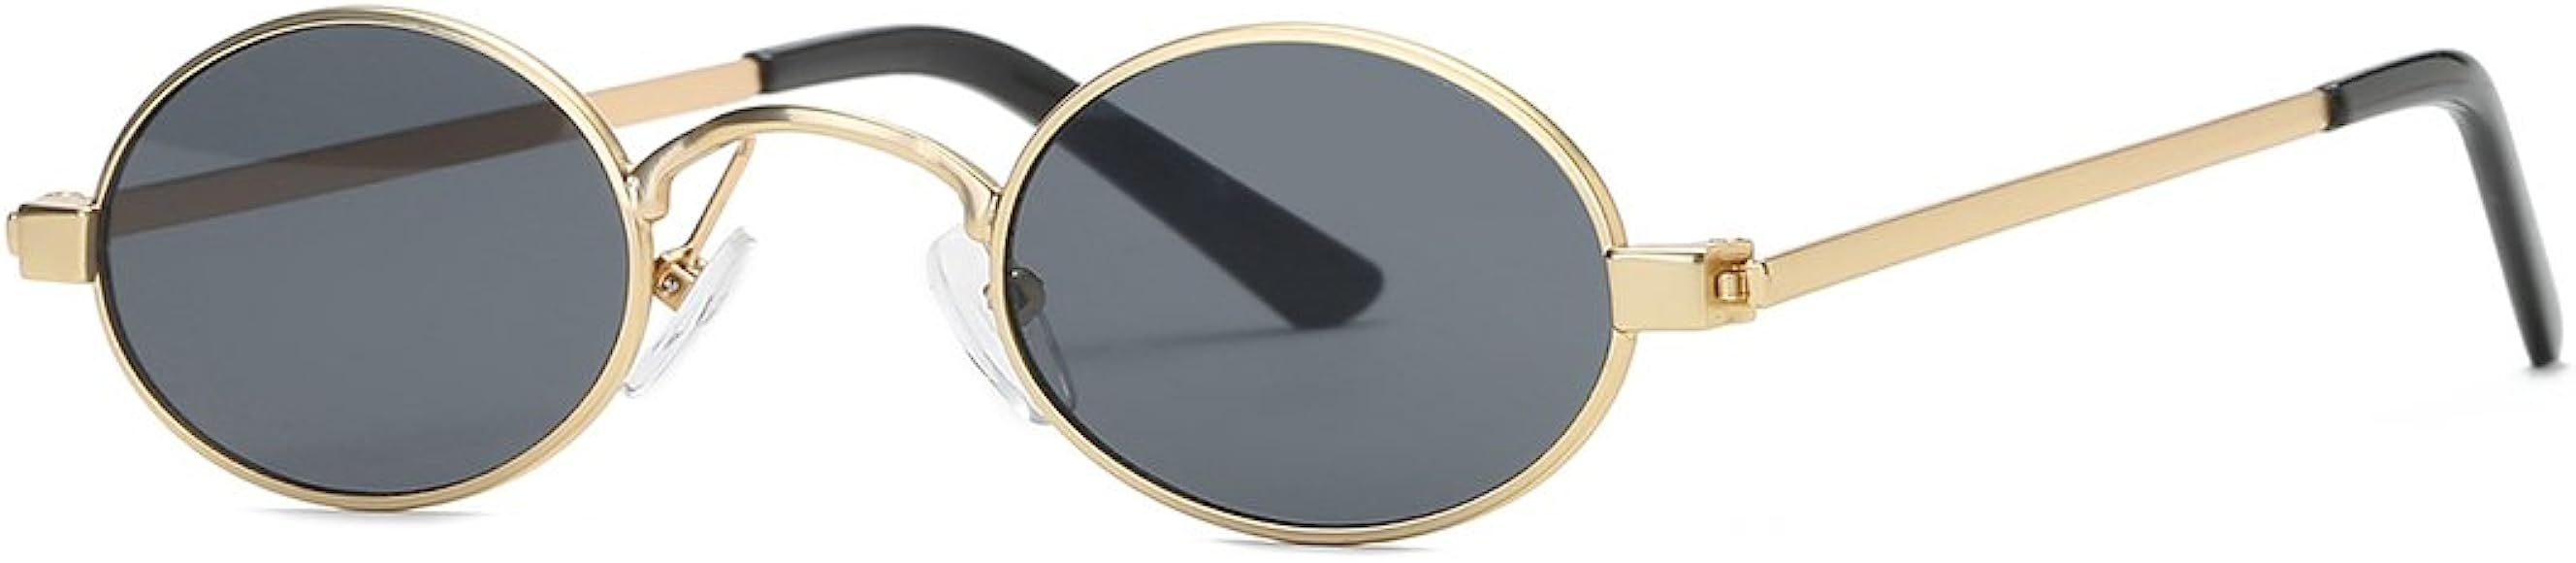 Kimorn Sunglasses Small Round Metal Frame Oval Candy Colors Unisex Sun Glasses k0577 | Amazon (CA)